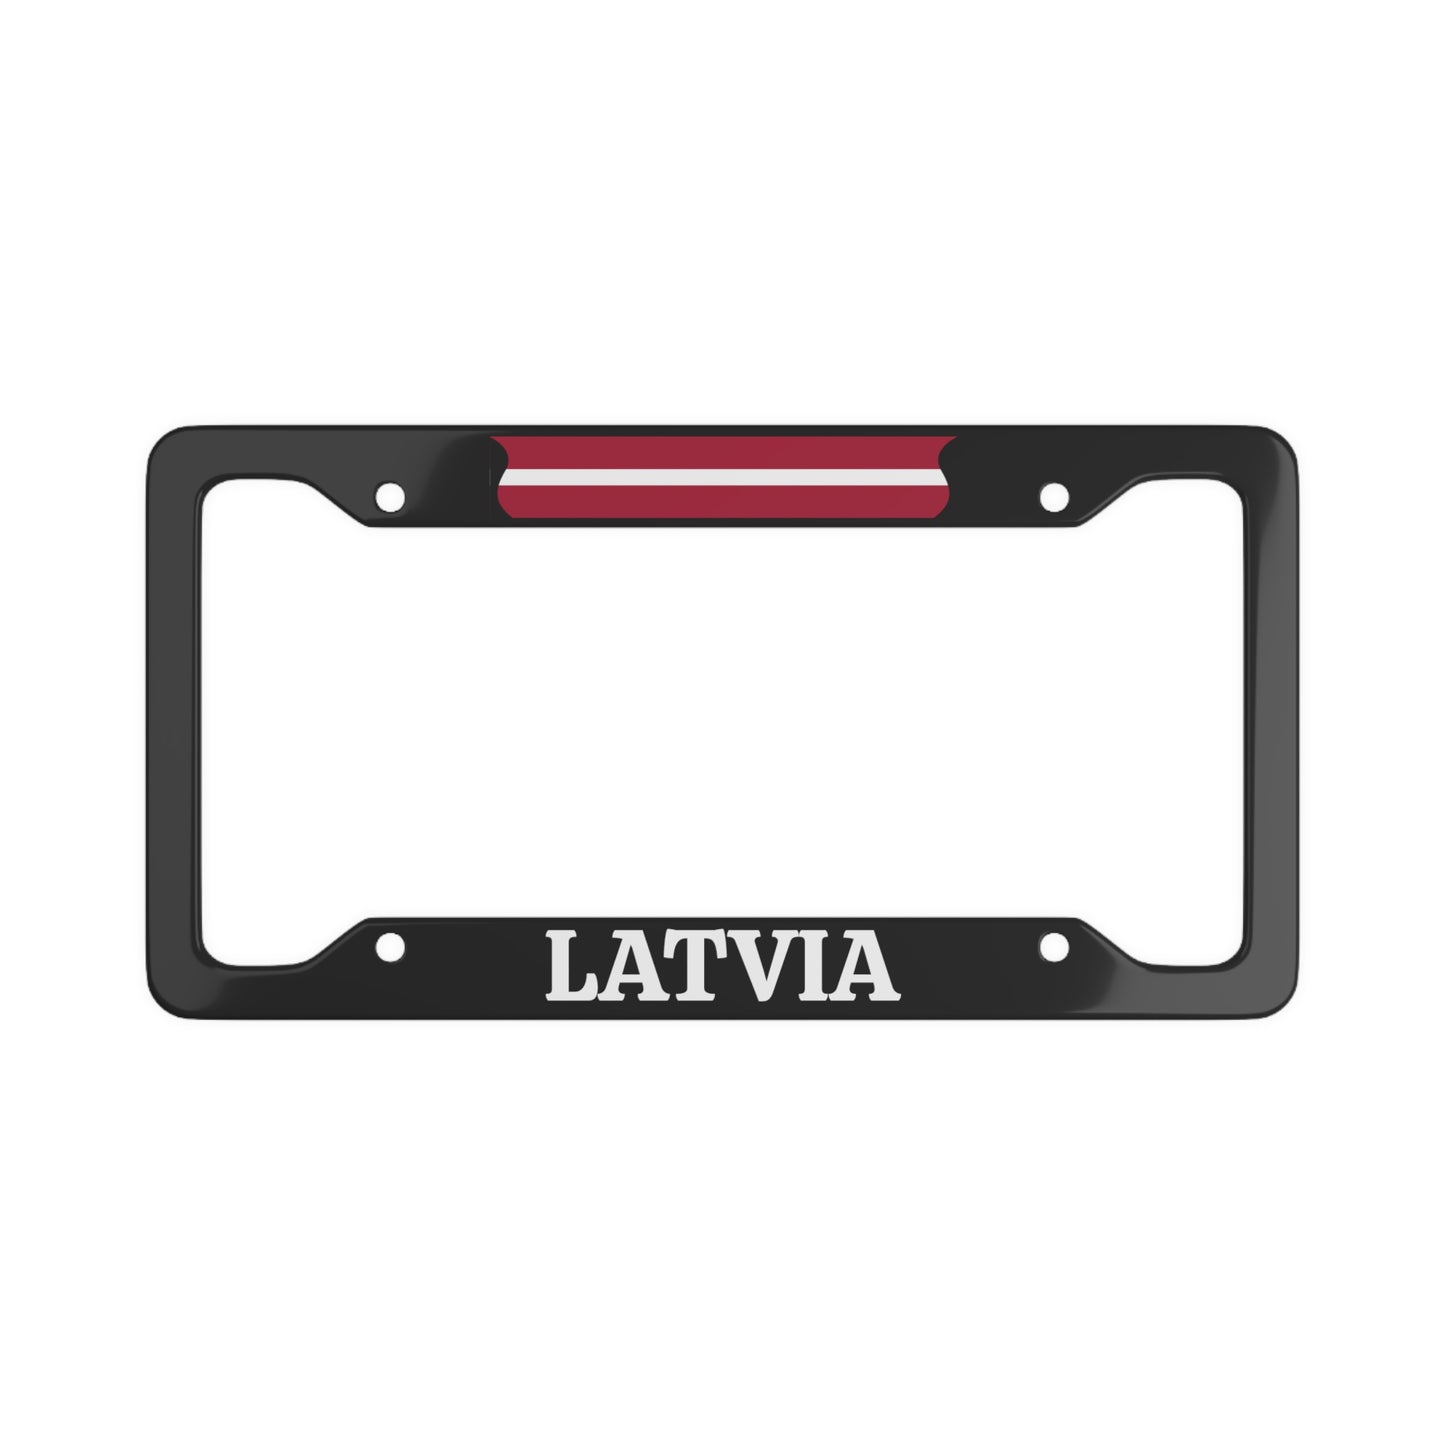 Latvia License Plate Frame